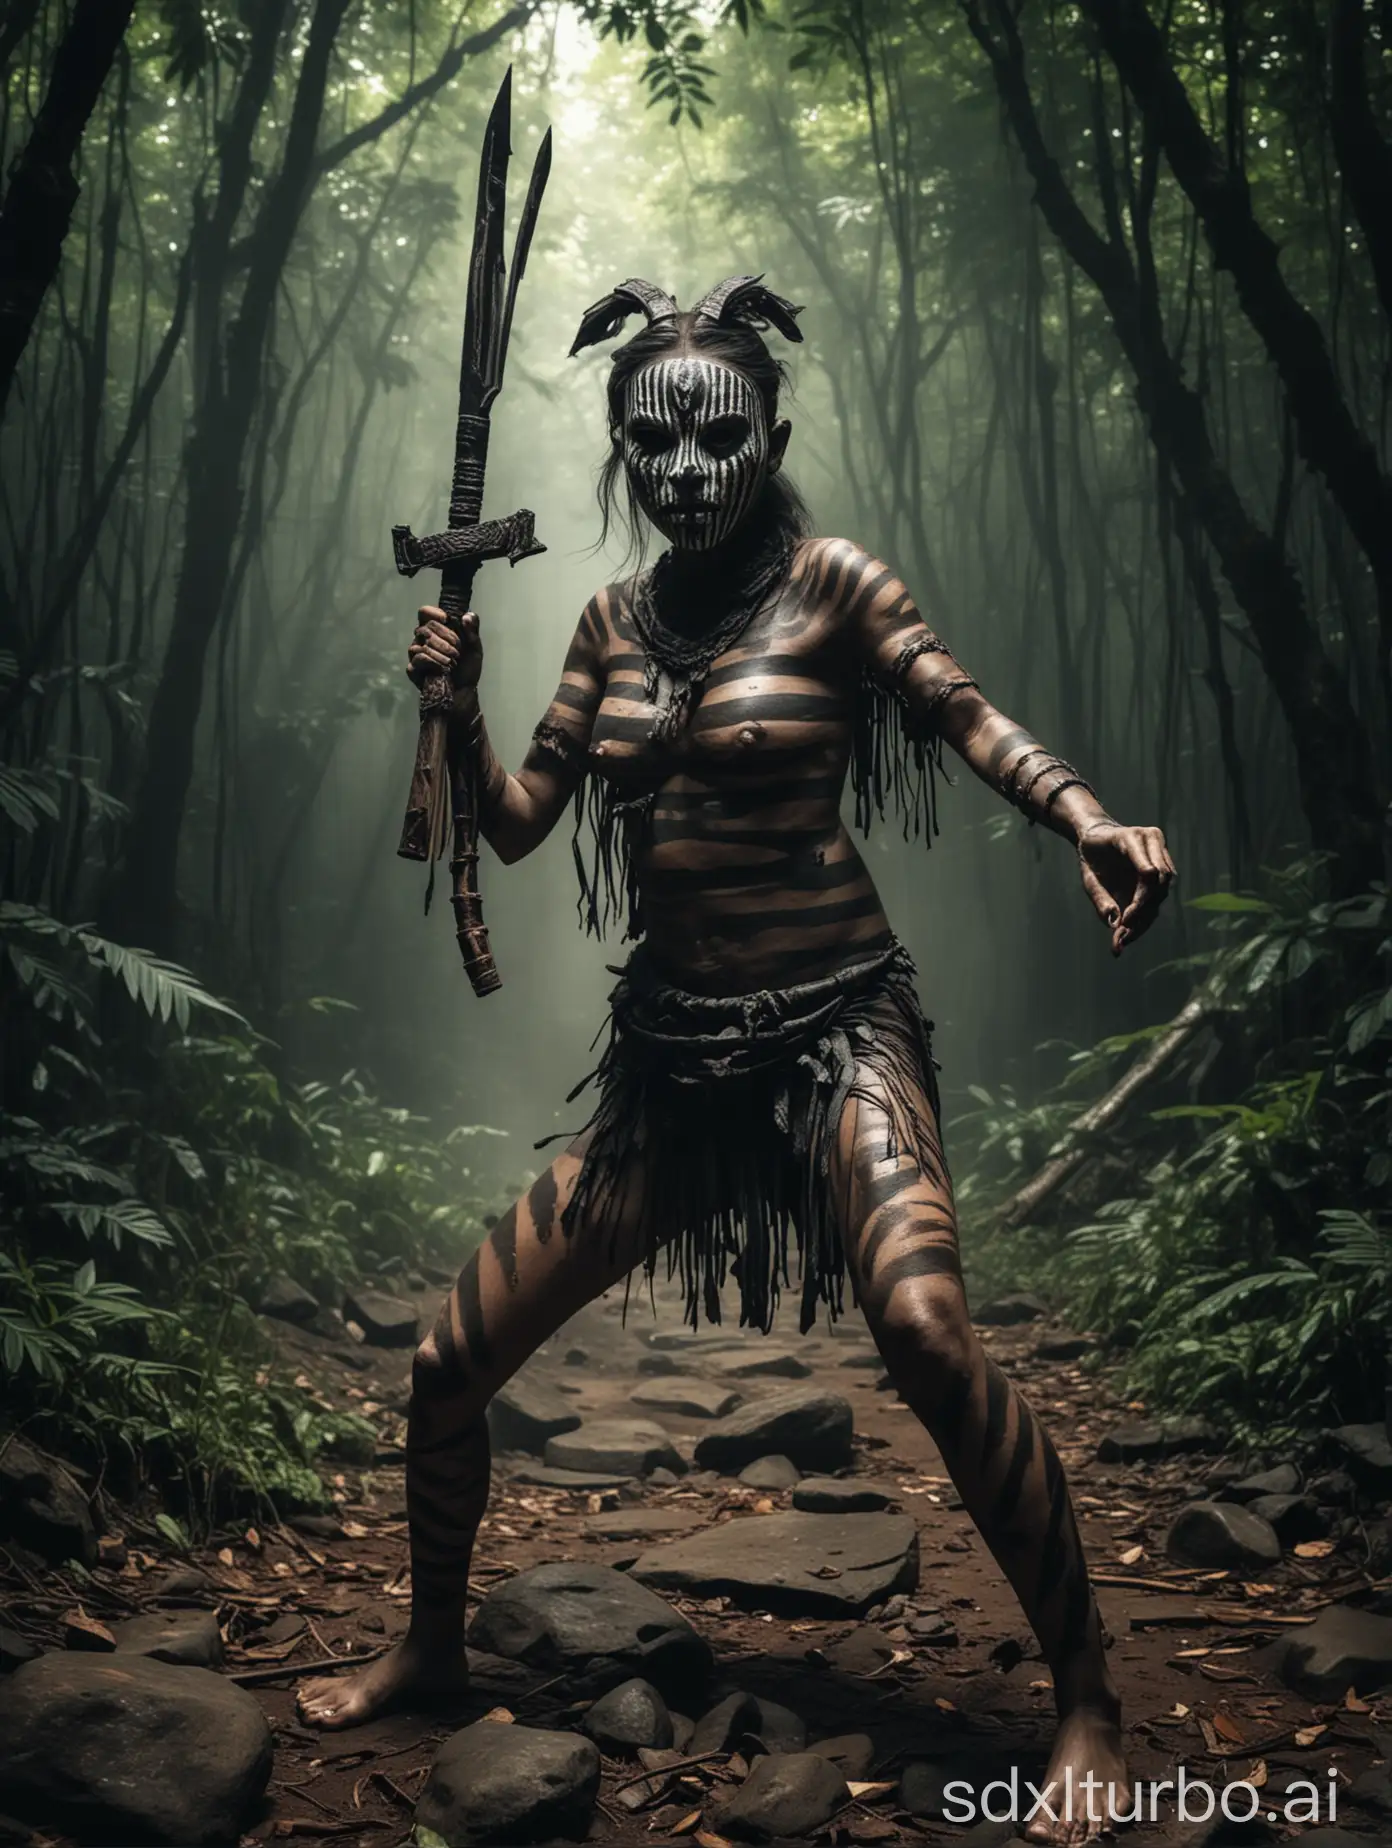 Fierce-Tribal-Woman-Warrior-in-Striped-Wooden-Mask-in-Shady-Jungle-Ambience